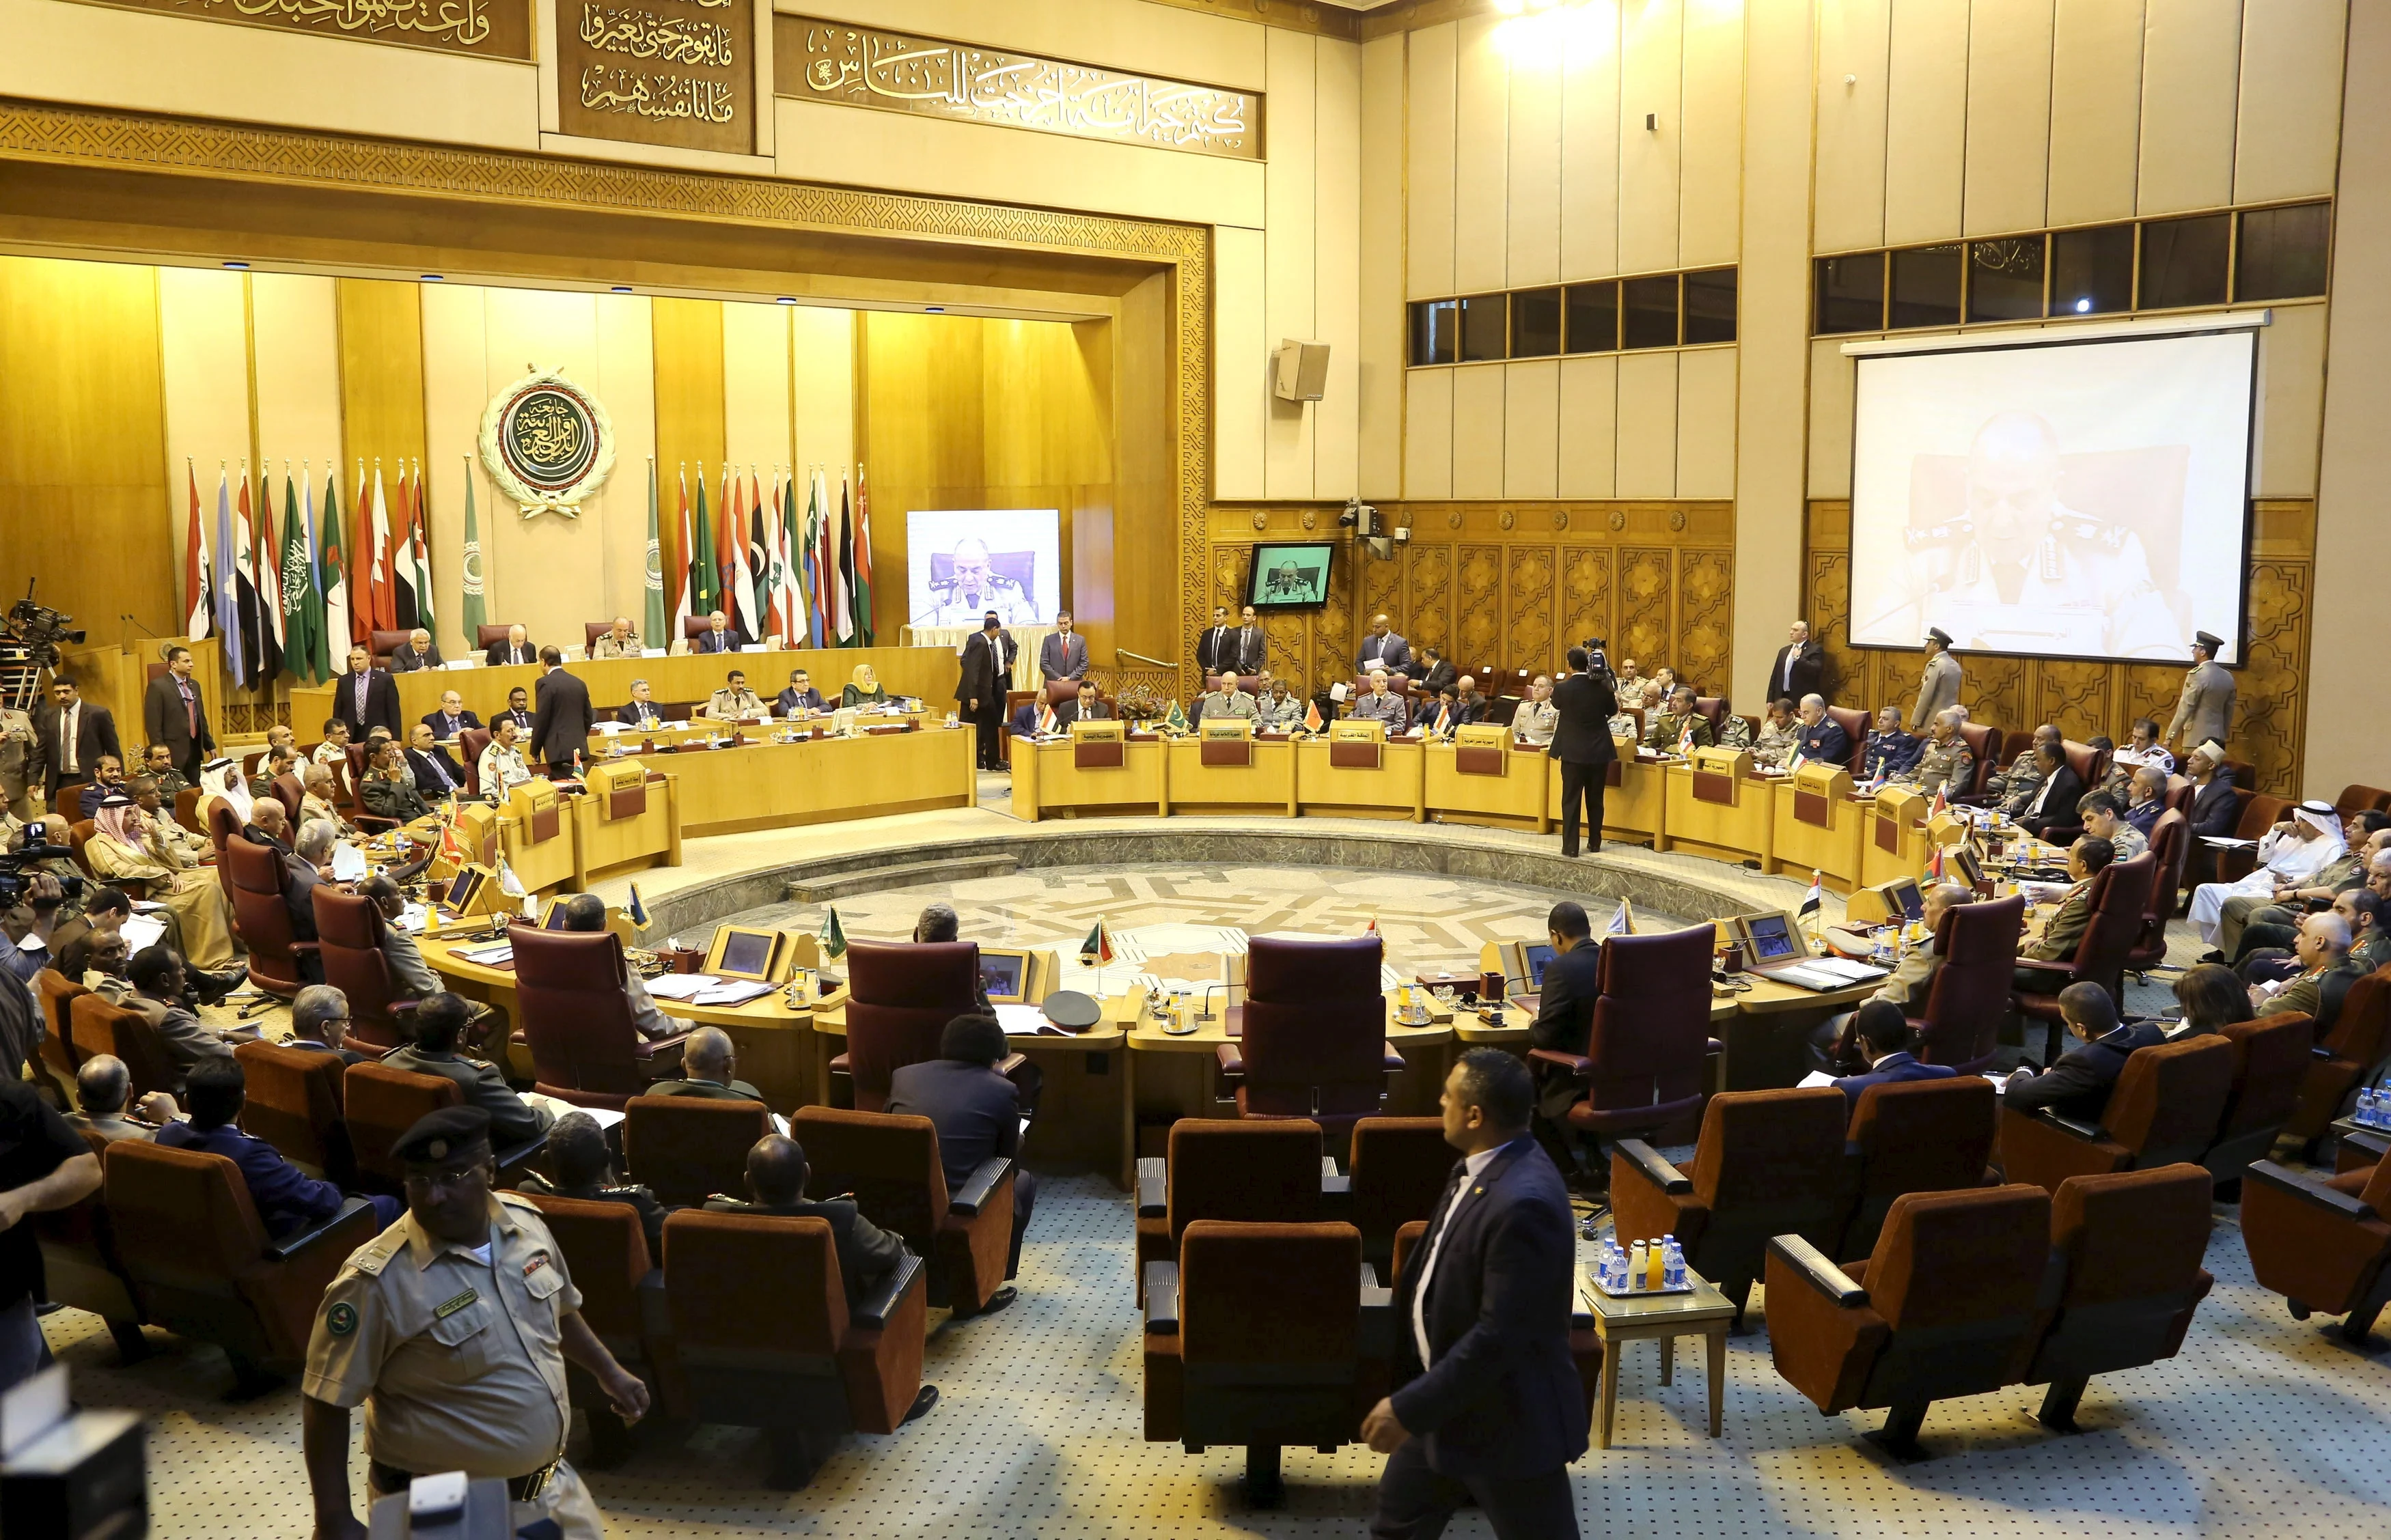 כינוס של הליגה הערבית